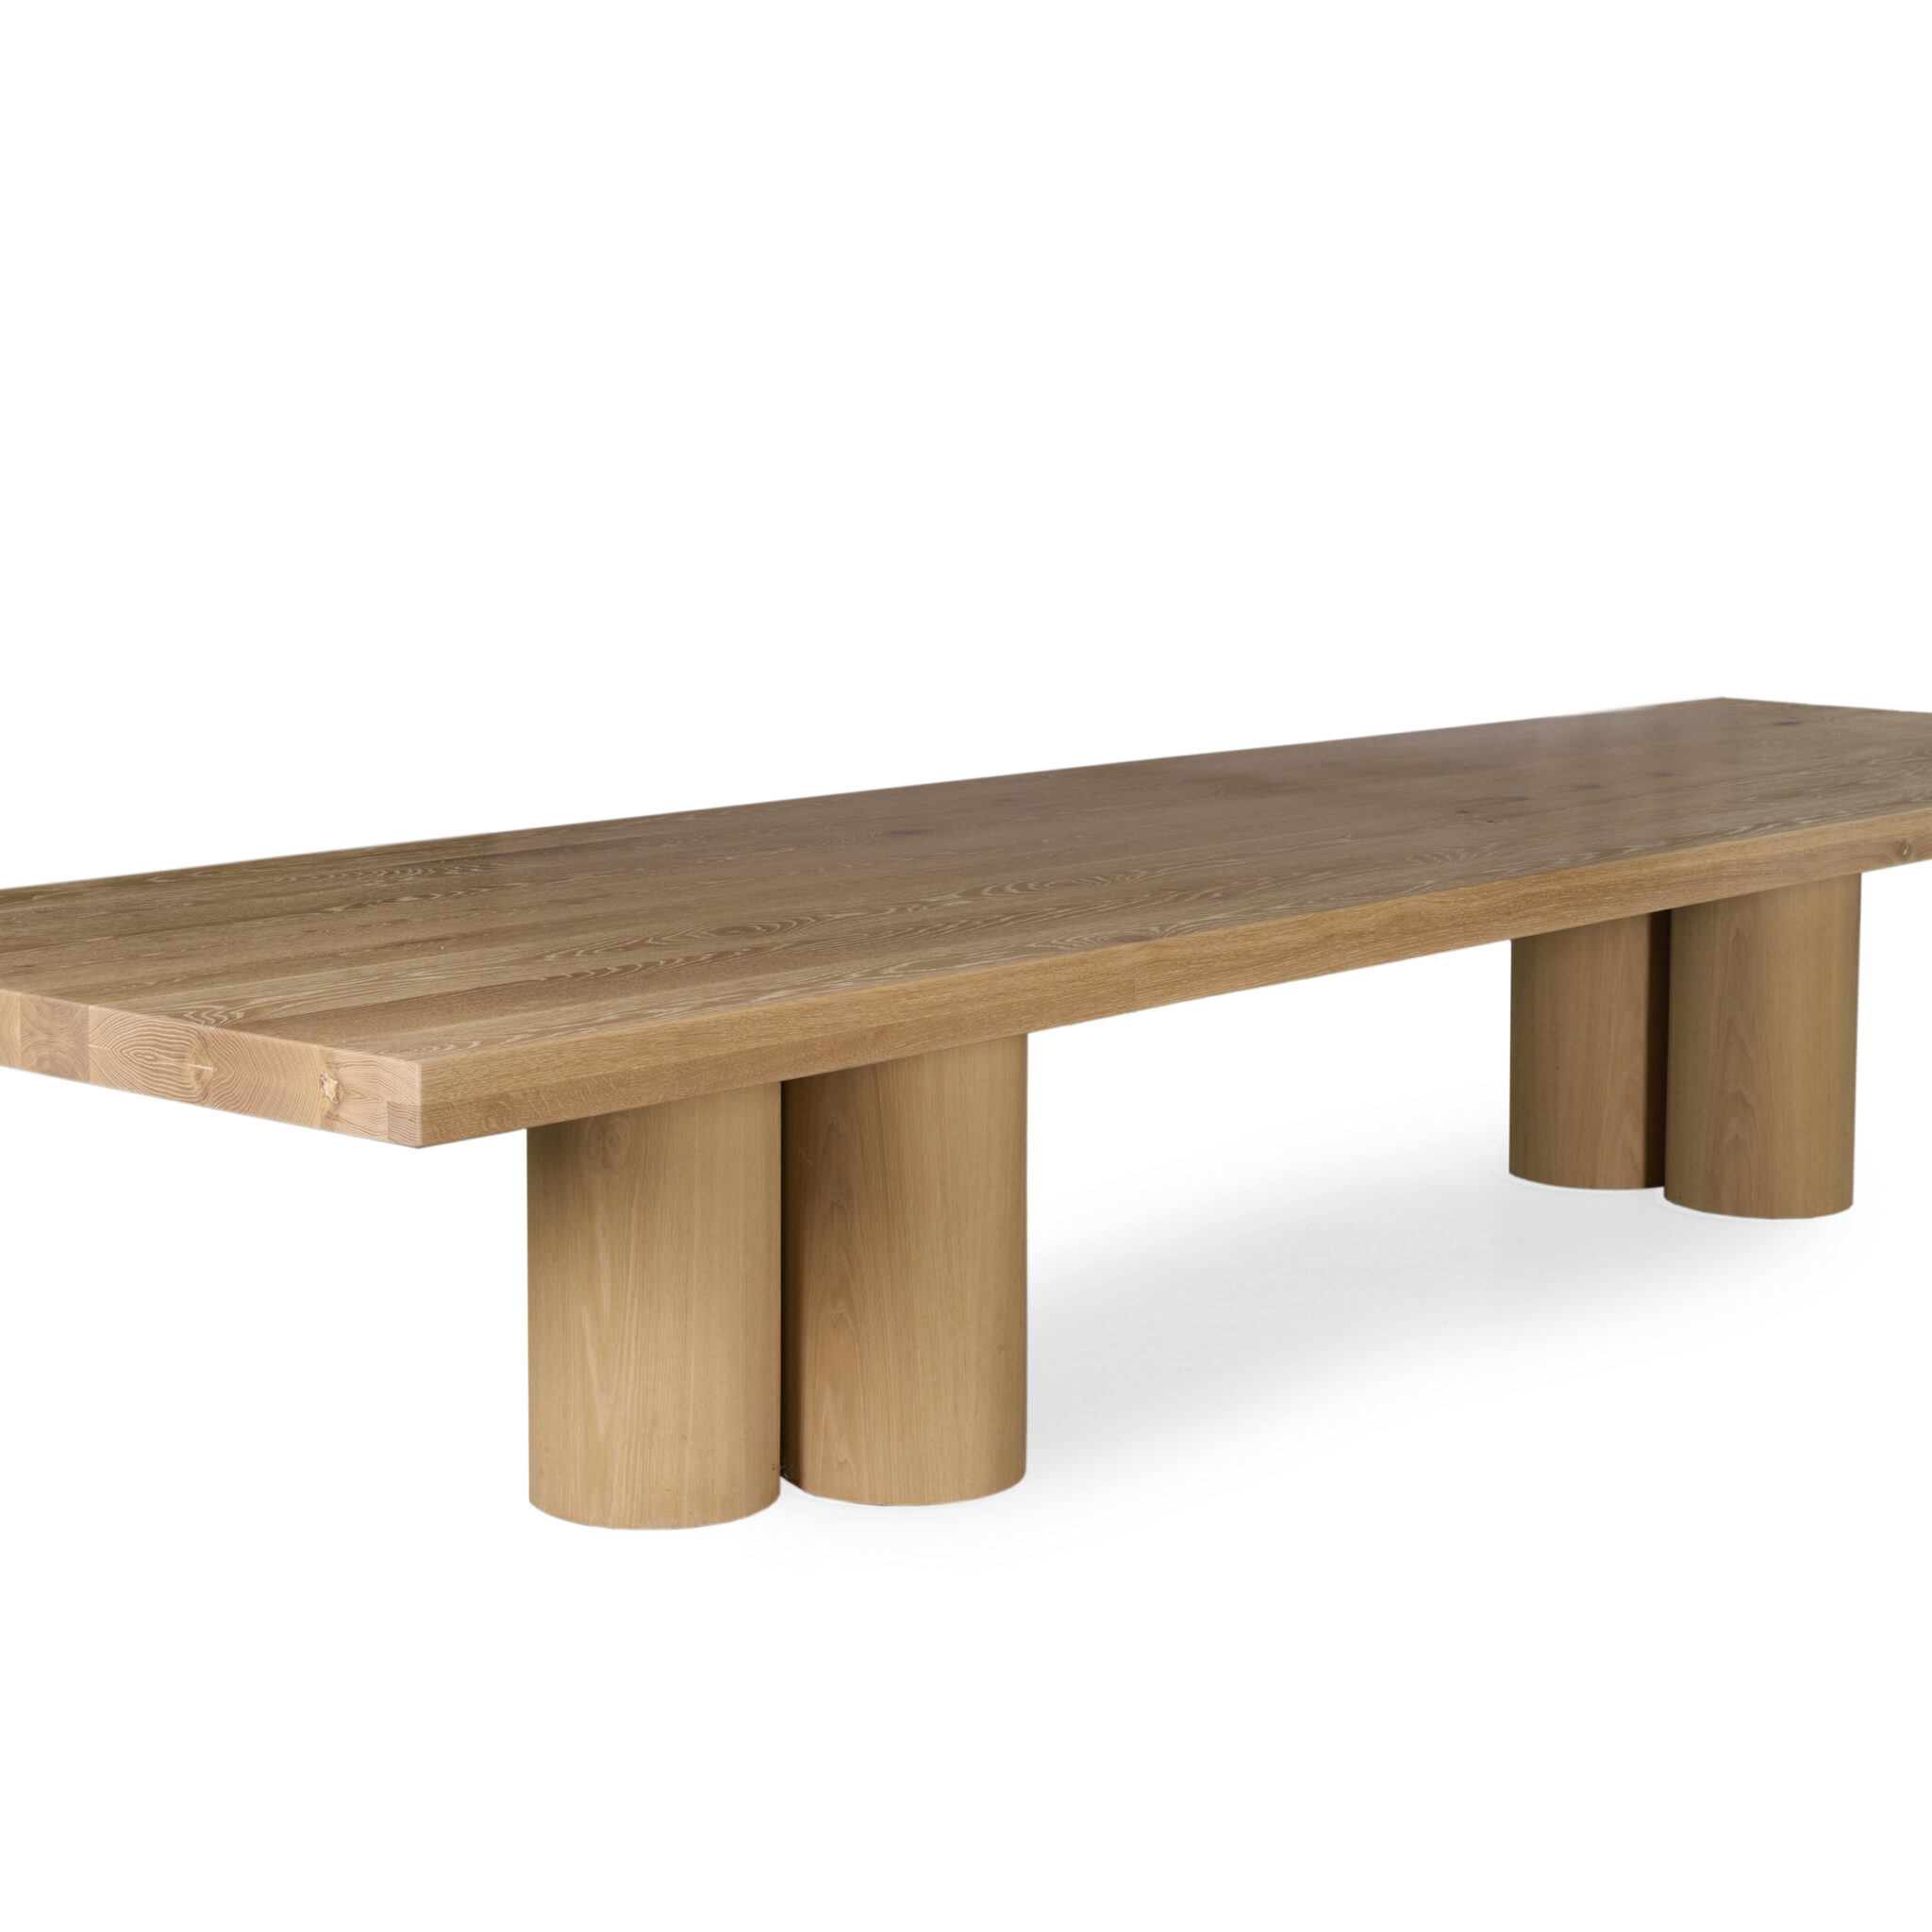 Elegant Pier Boardroom Table: American Oak, 4800x1300mm, Pencil Edge, White Oil Finish, 3 Pillar Base.